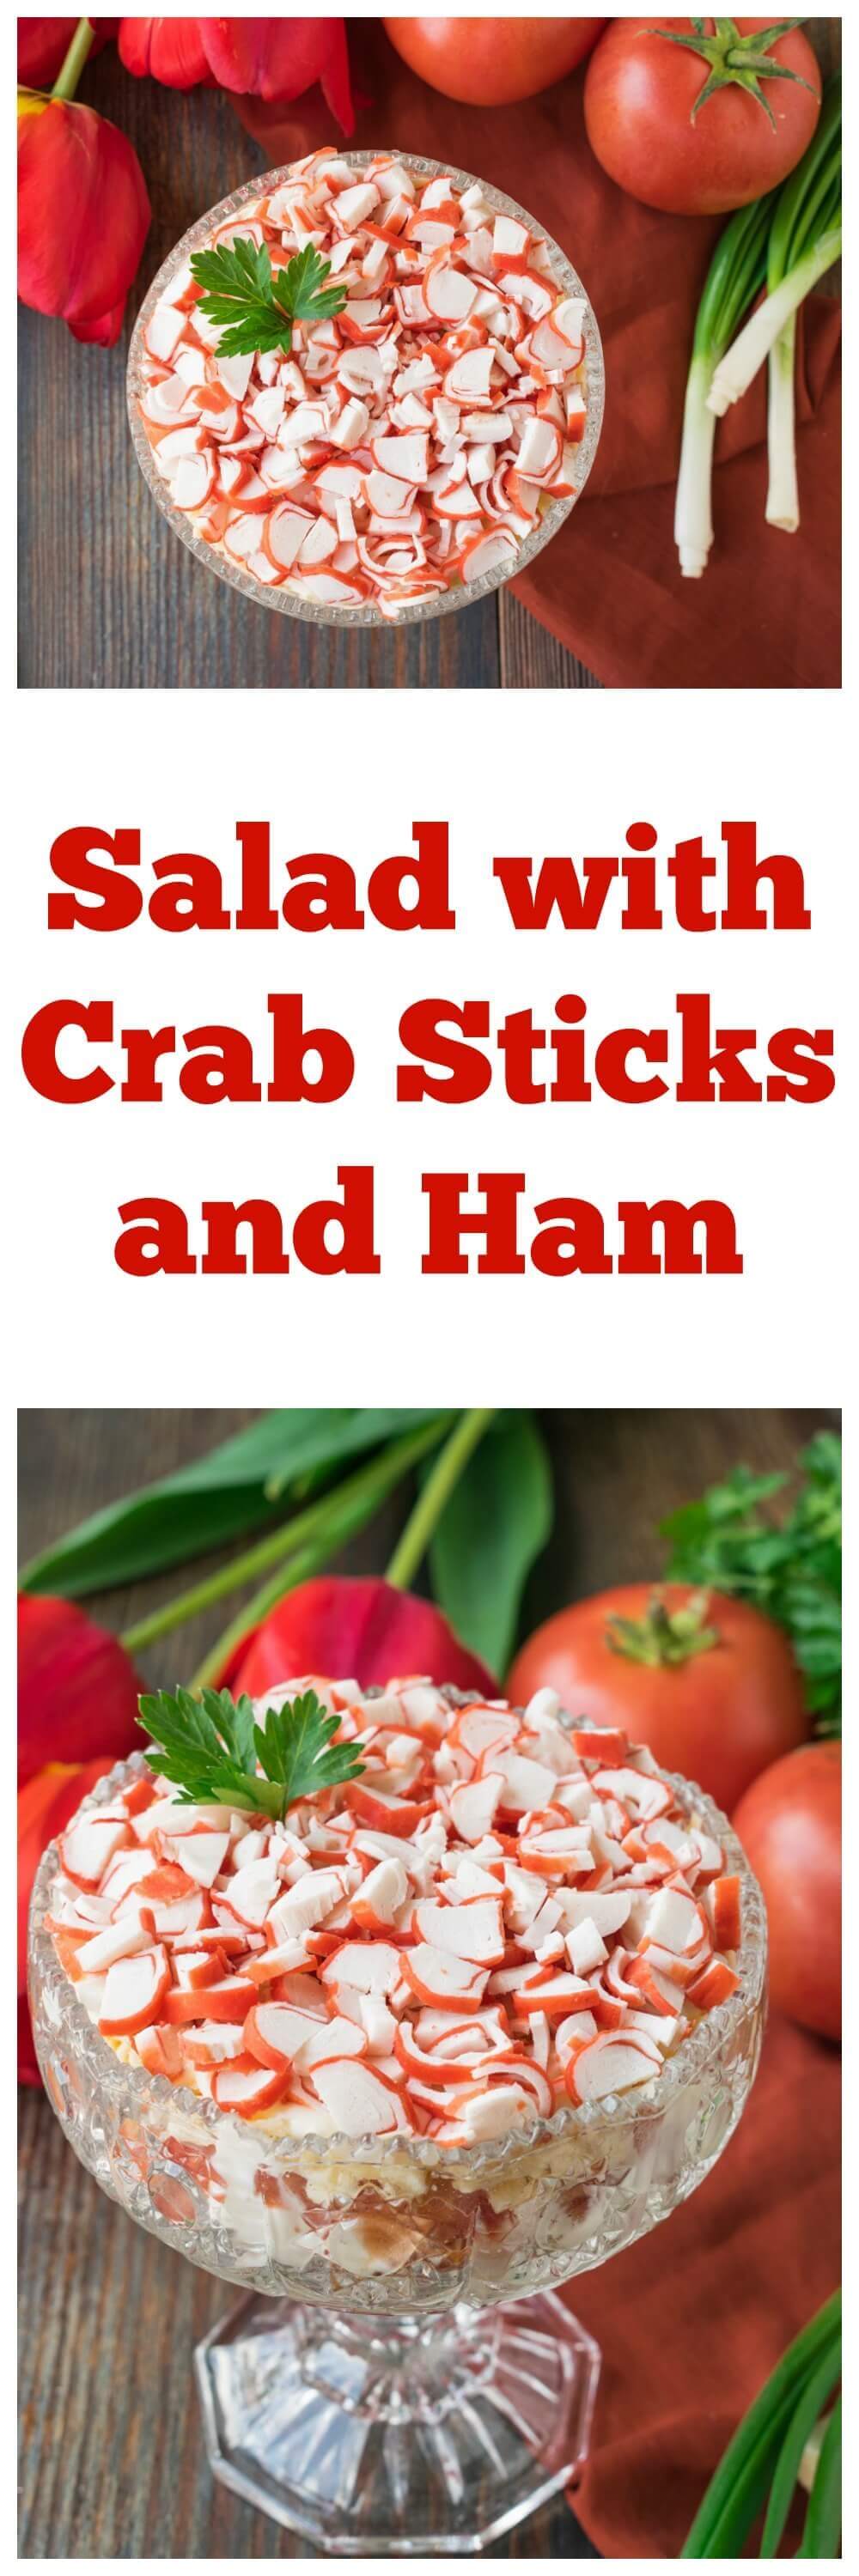 Salad with Crab Sticks and Ham